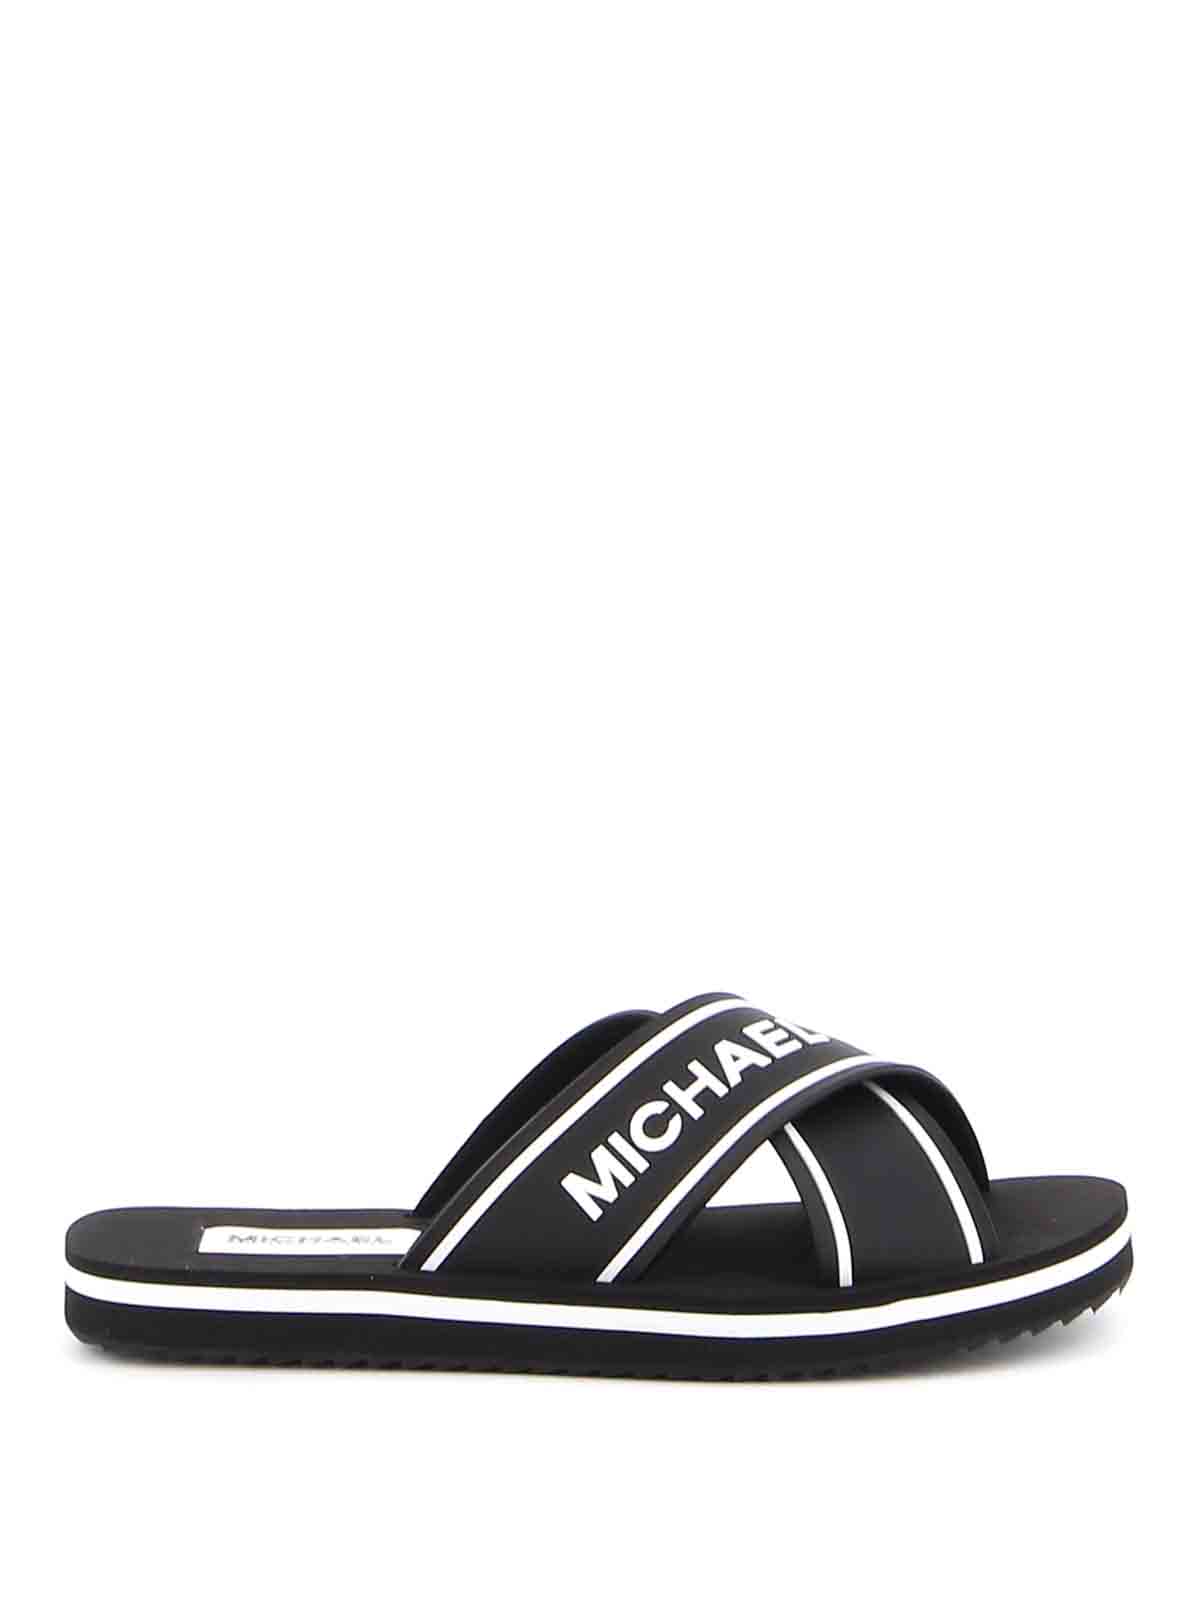 Flip flops Michael Kors - Sparrow criss cross black sandals - 40S0SPFA1Q001